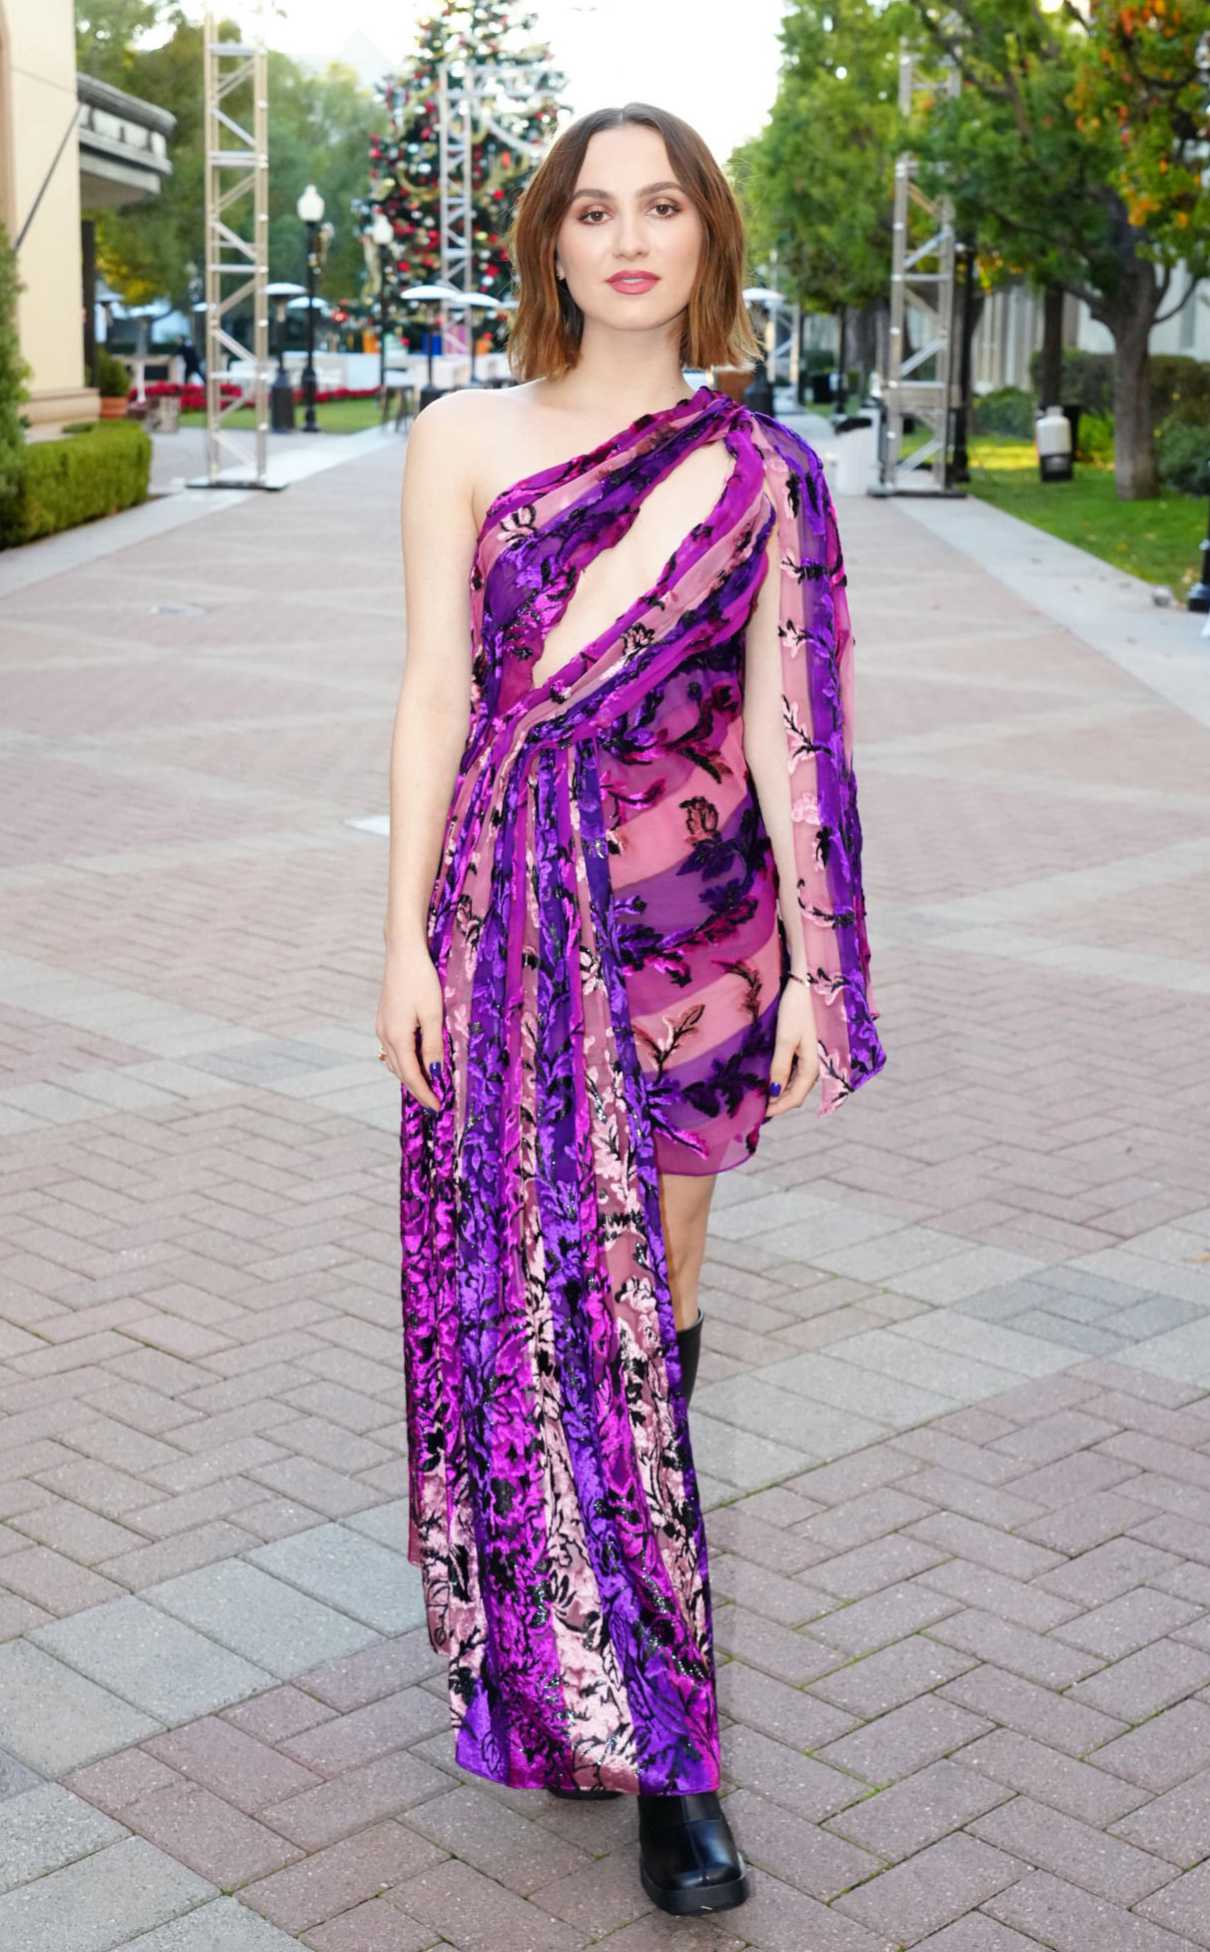 Maude Apatow in a Purple Dress